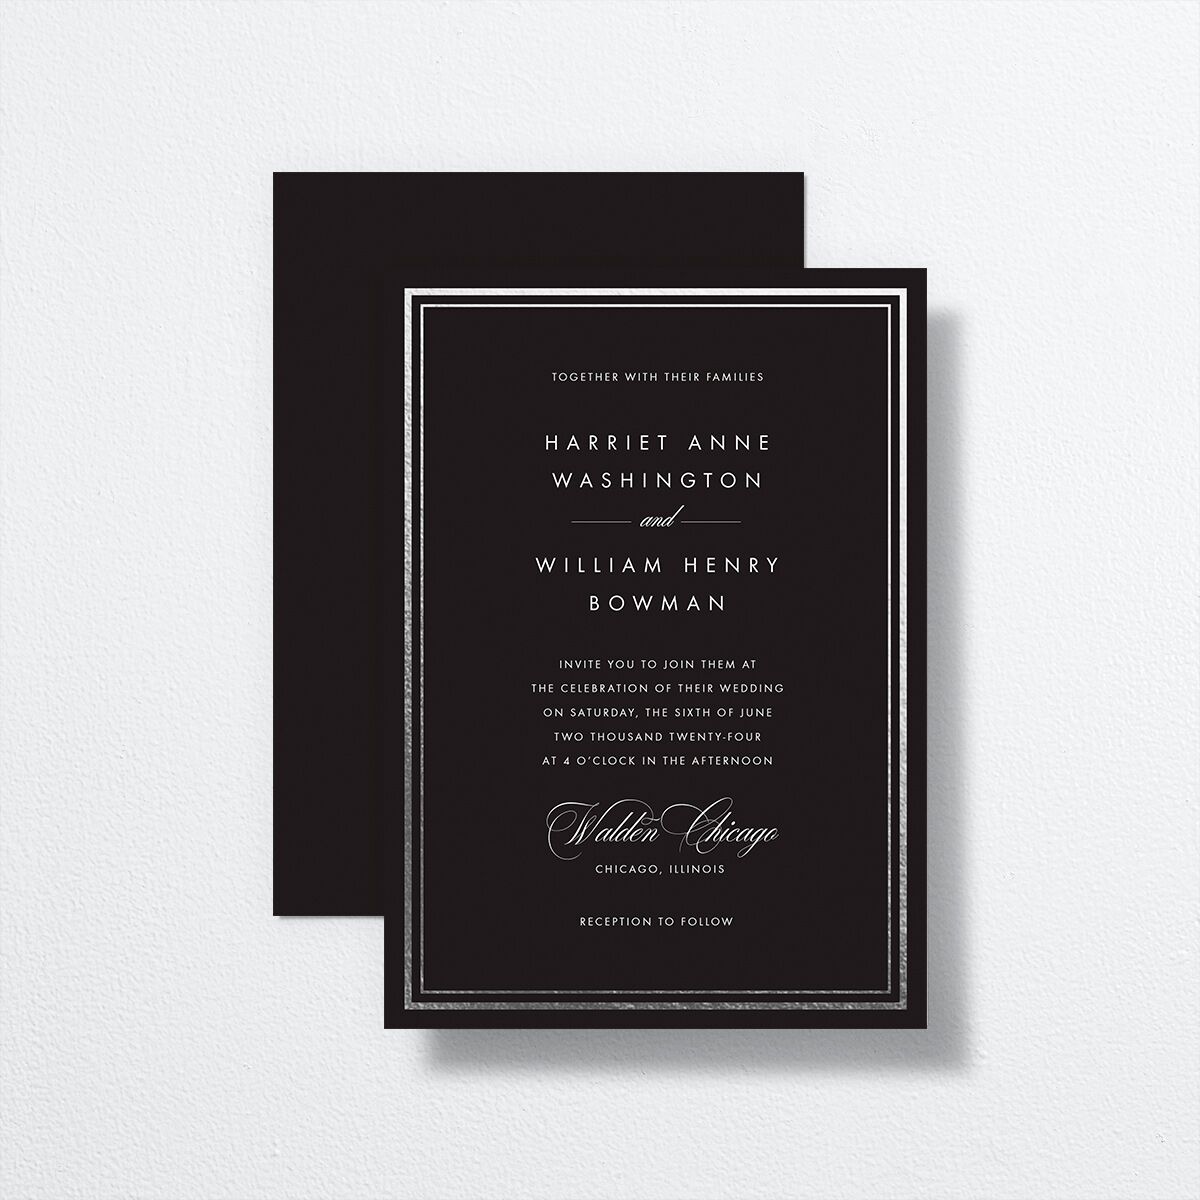 Polished Frame Wedding Invitations | The Knot